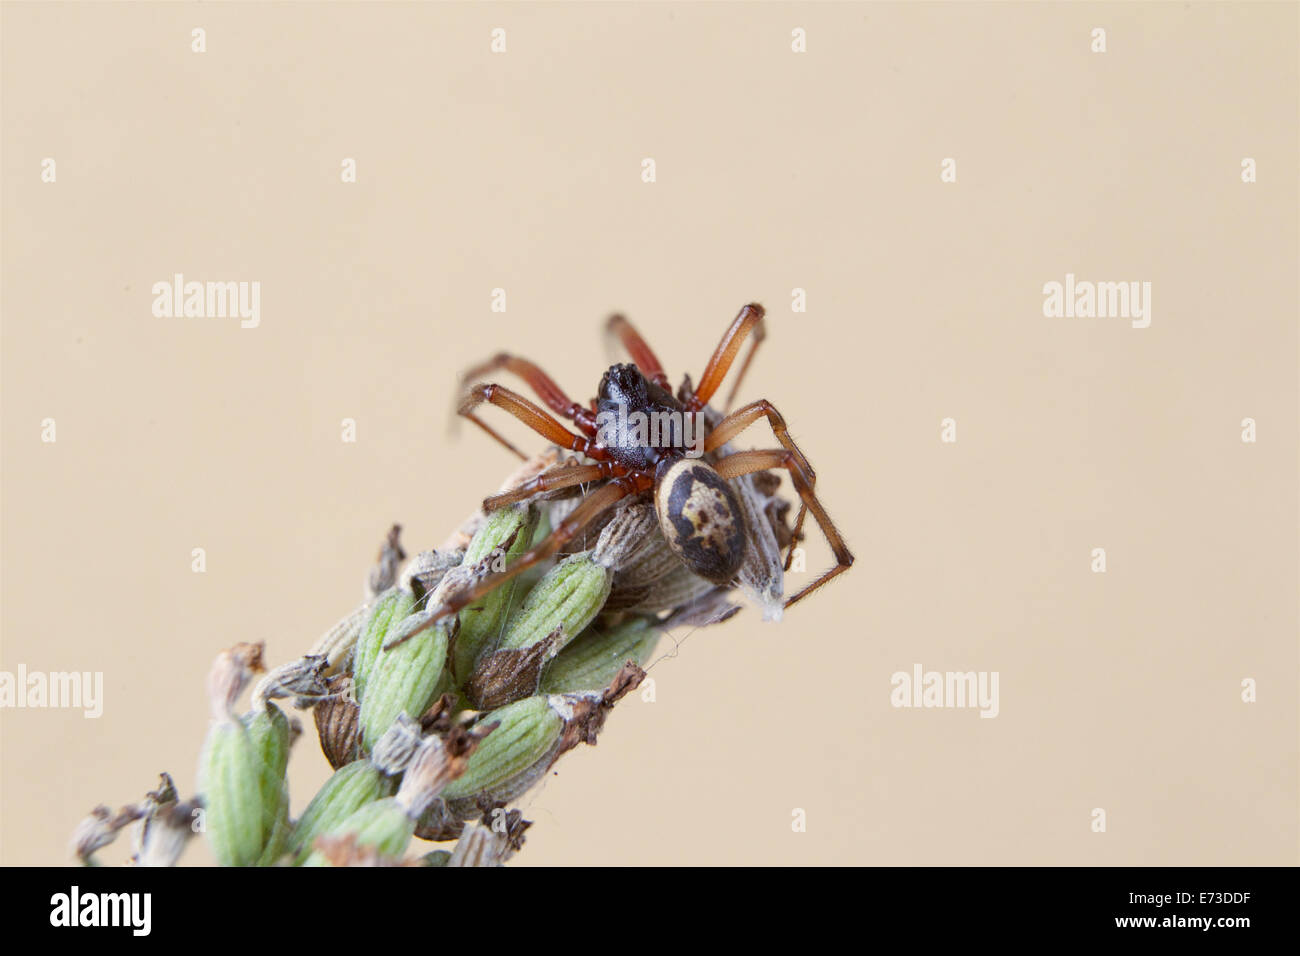 Nobile vedova falso spider Foto Stock